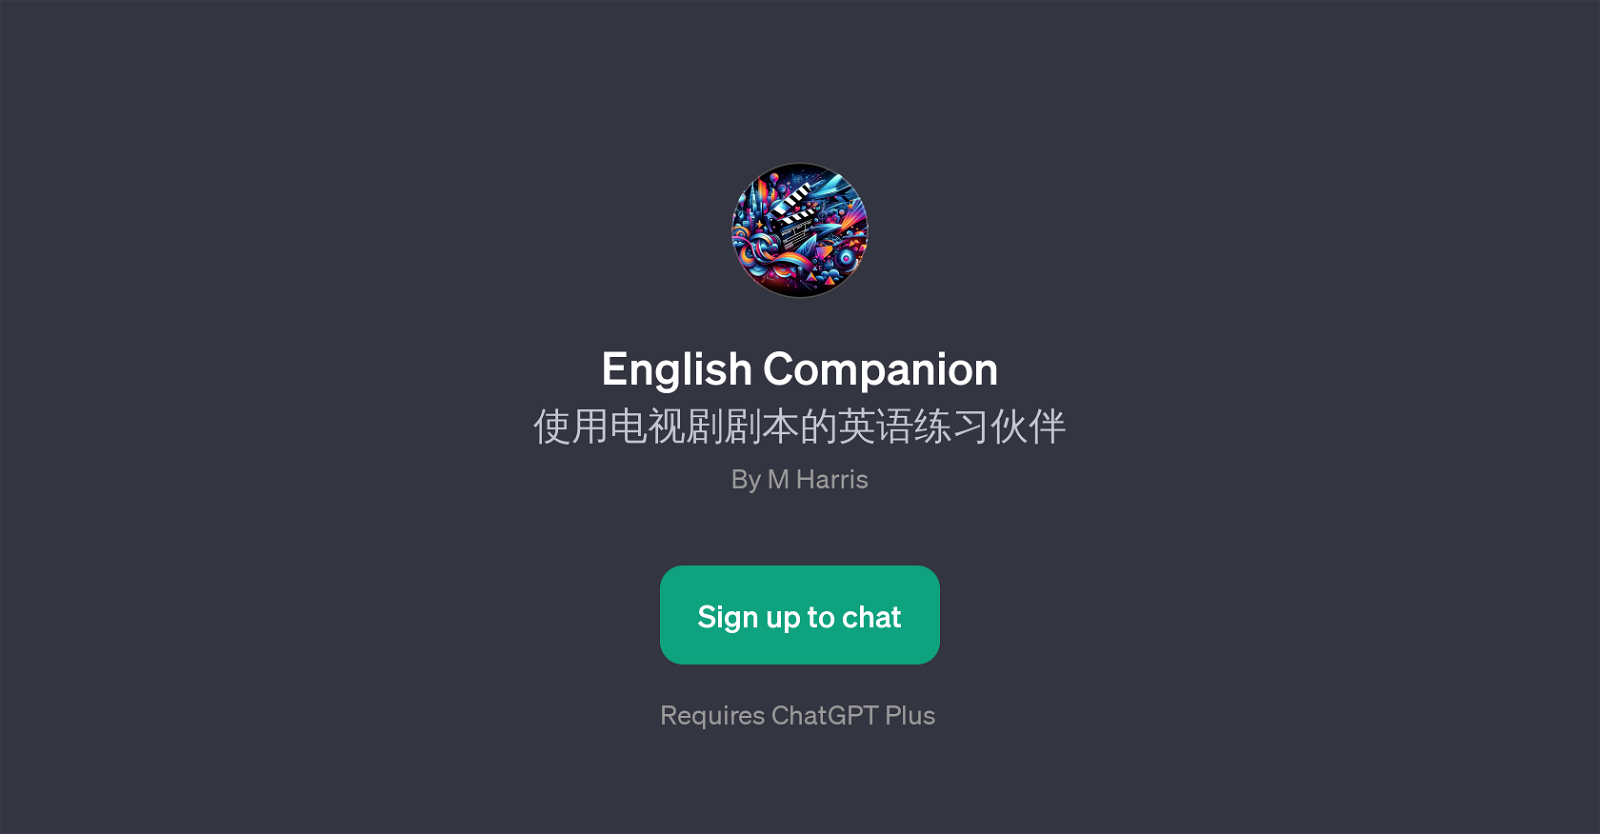 English Companion website